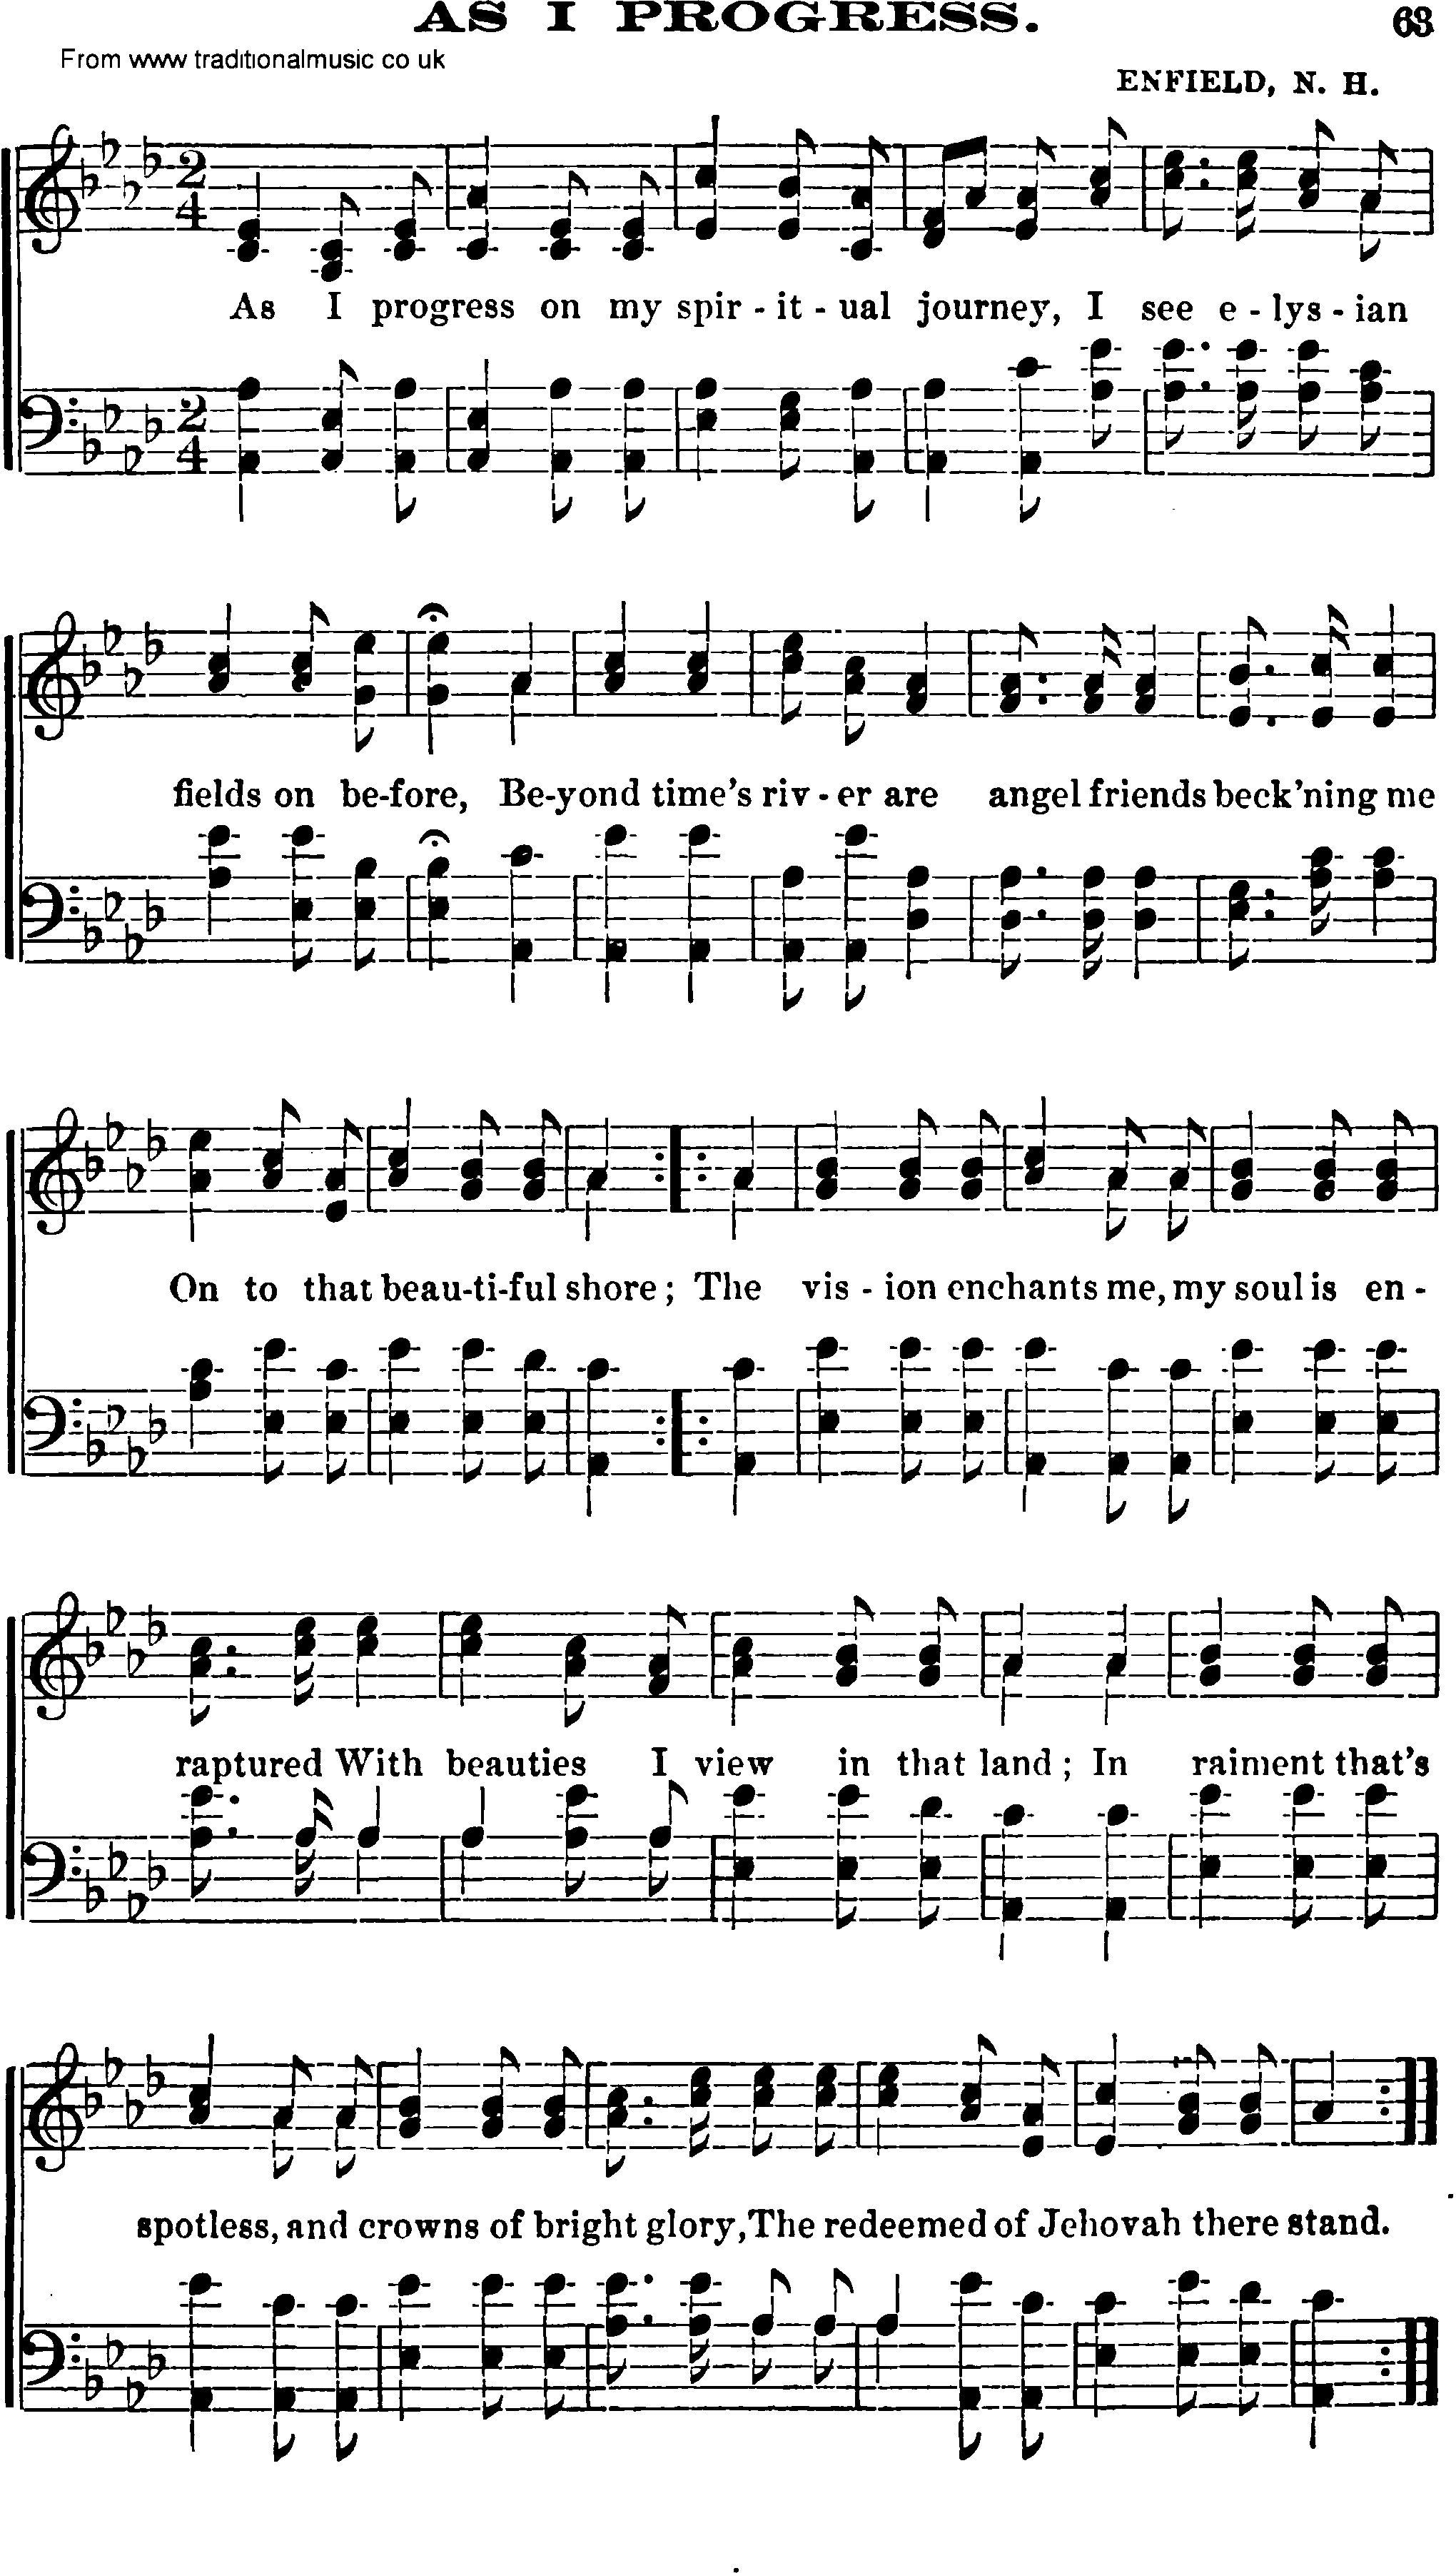 Shaker Music collection, Hymn: As I Progress, sheetmusic and PDF